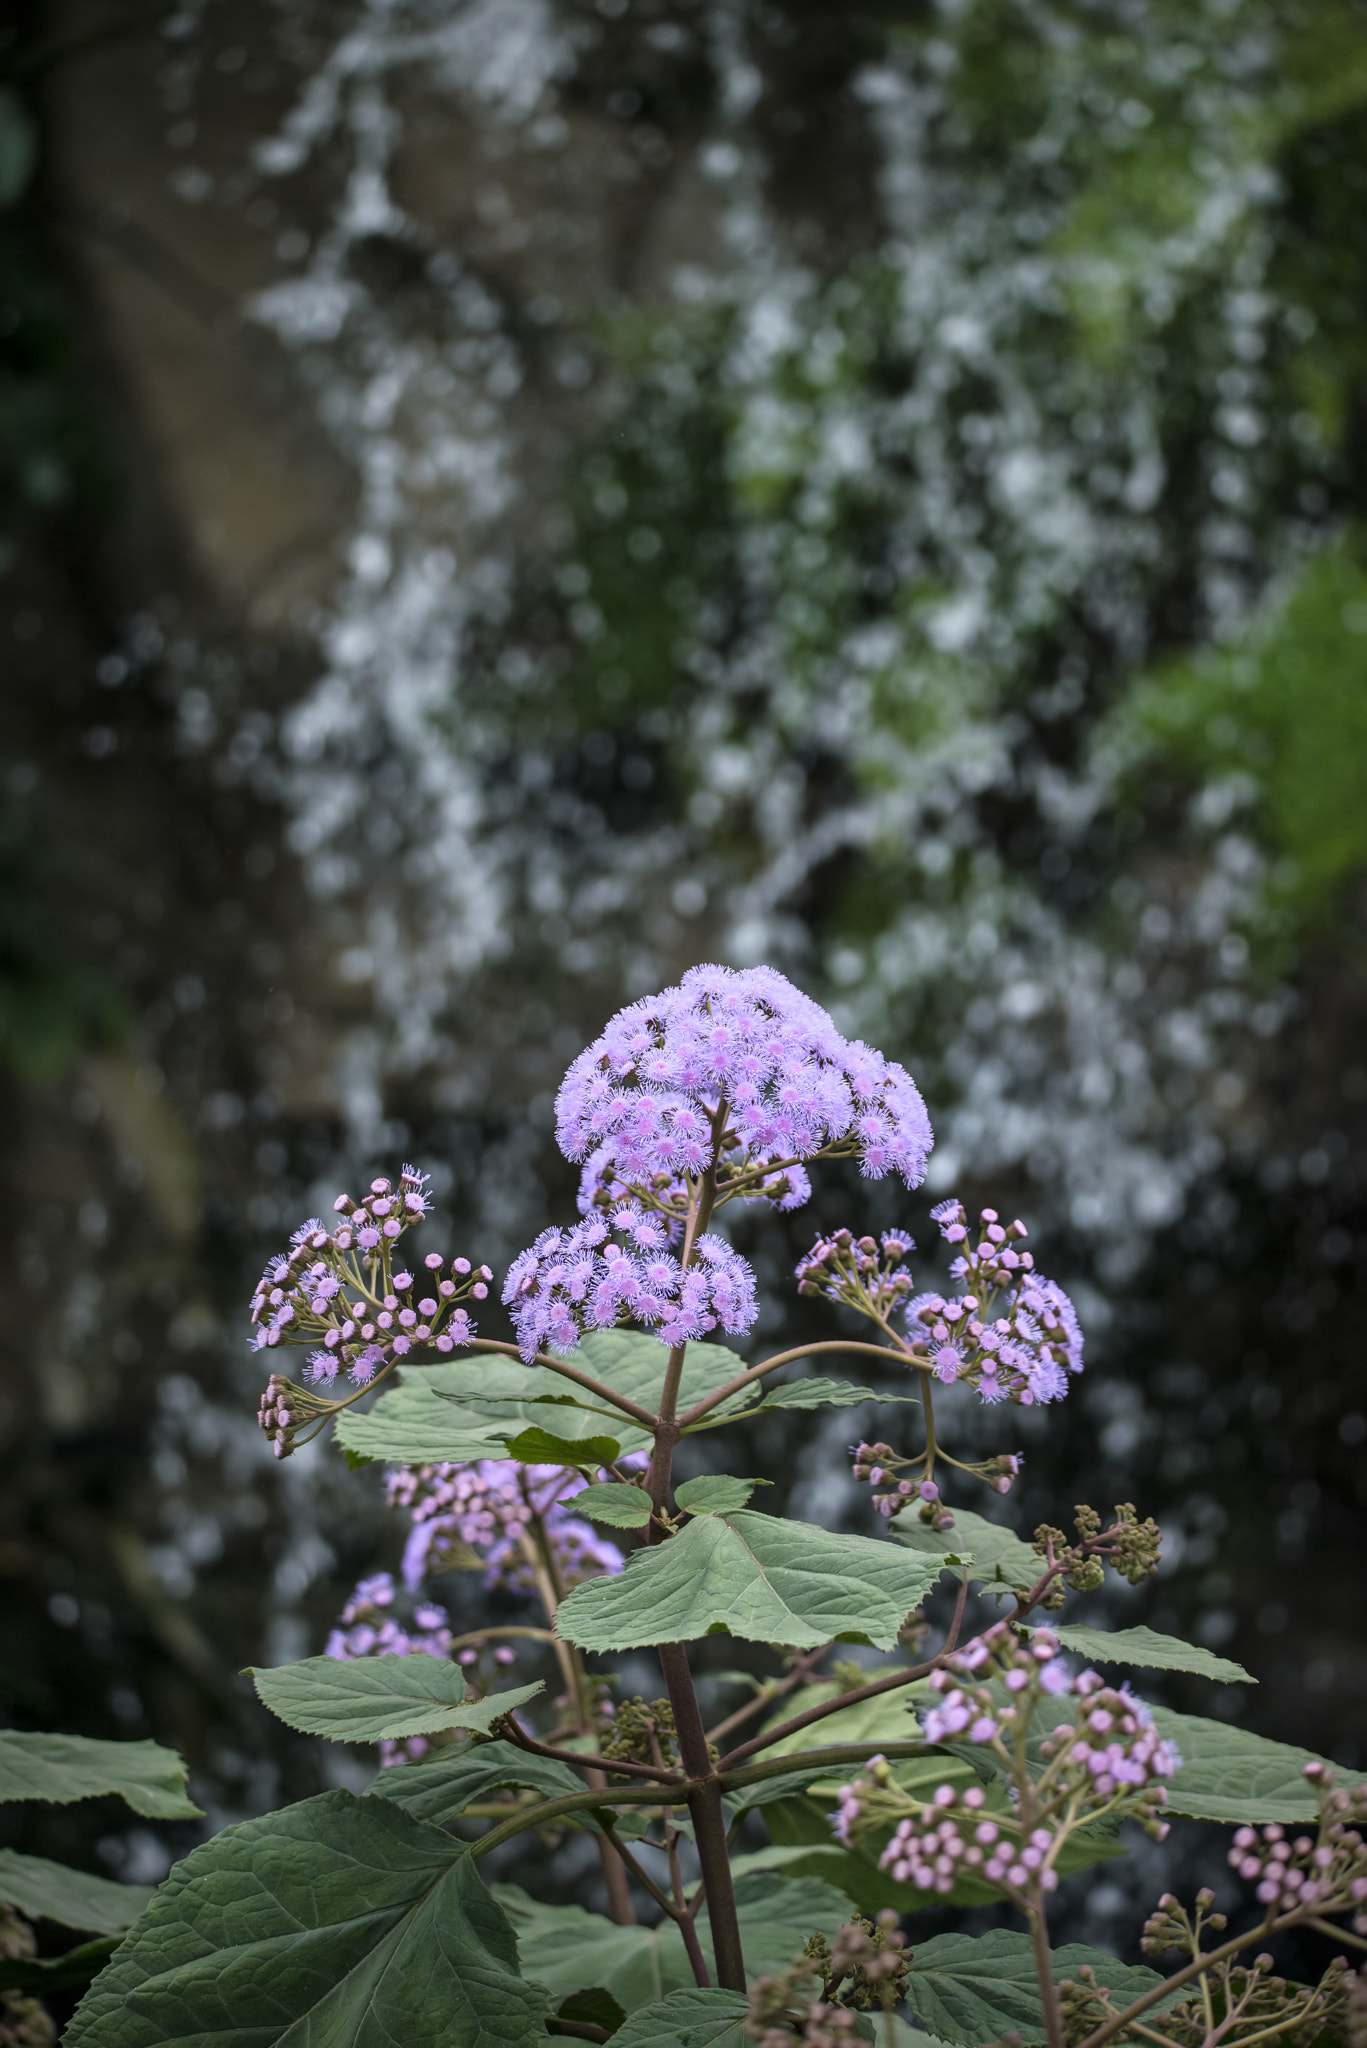 Nikon D800 + Sigma 150-600mm F5-6.3 DG OS HSM | C sample photo. Stunning purple torch bartlettina sordida flower in full bloom photography